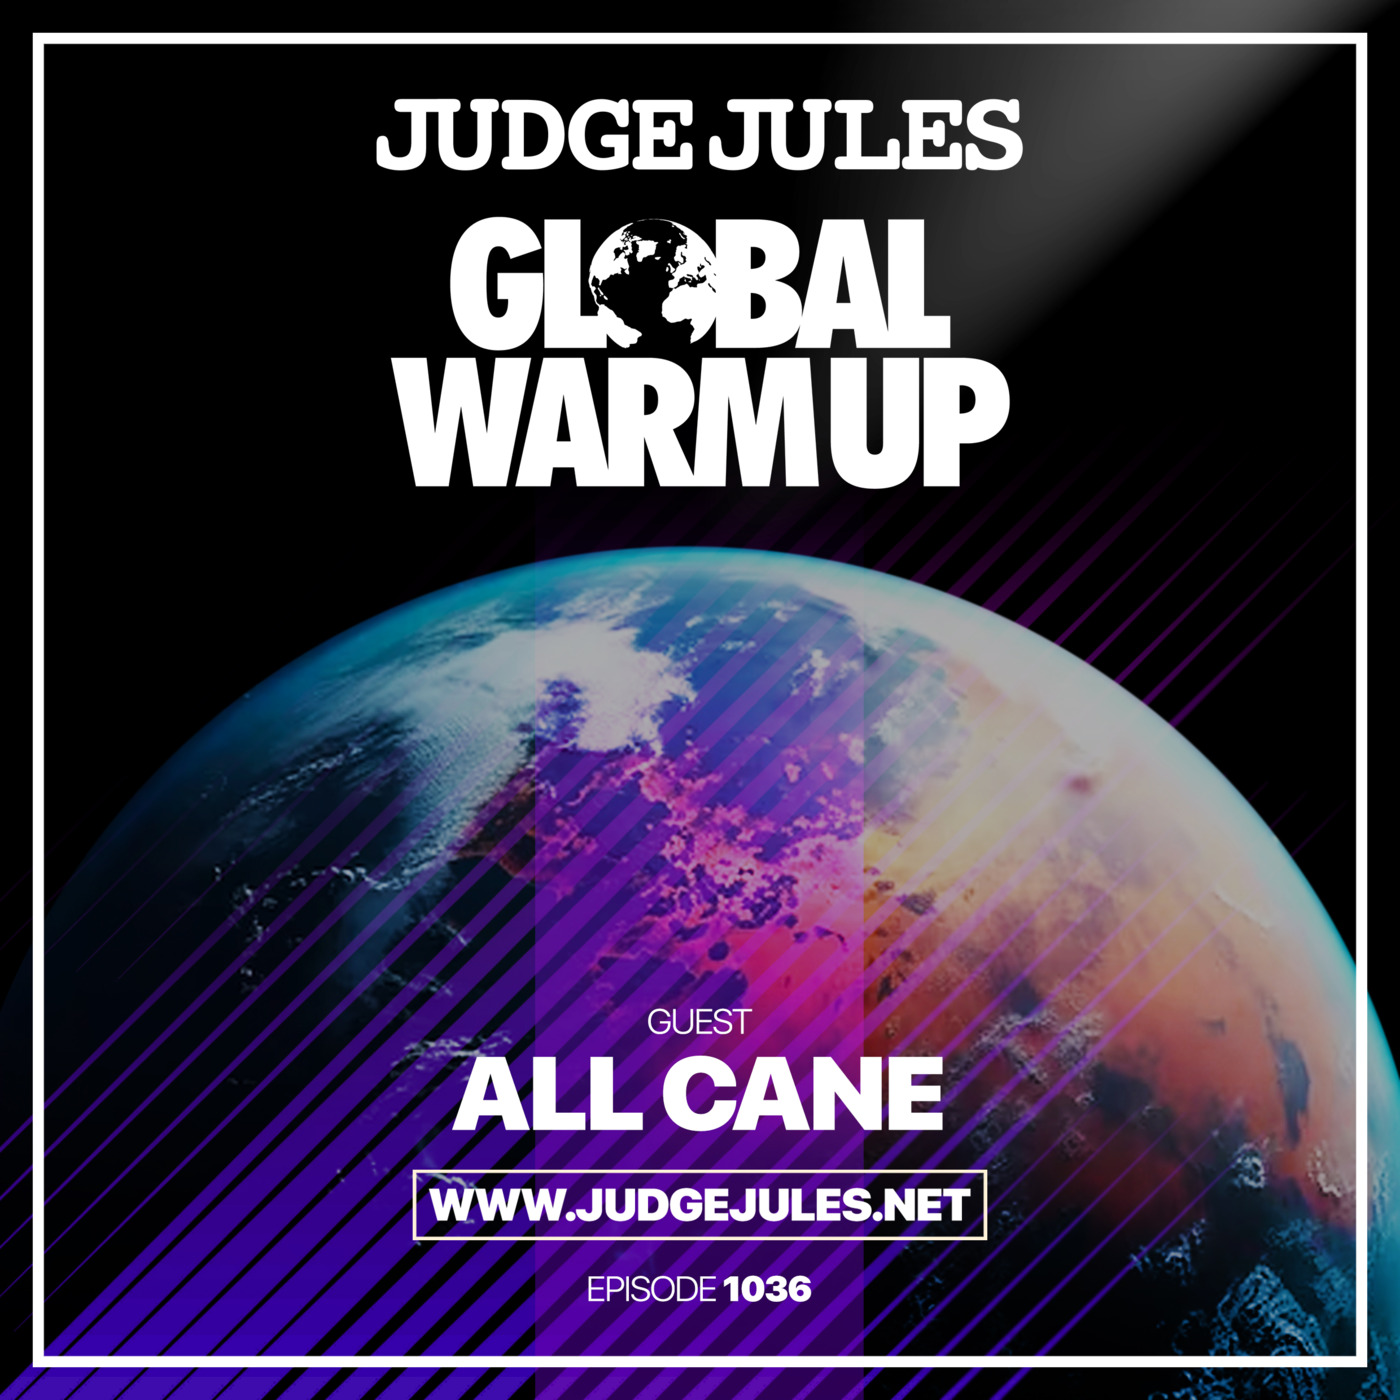 Episode 1036: JUDGE JULES PRESENTS THE GLOBAL WARM UP EPISODE 1036